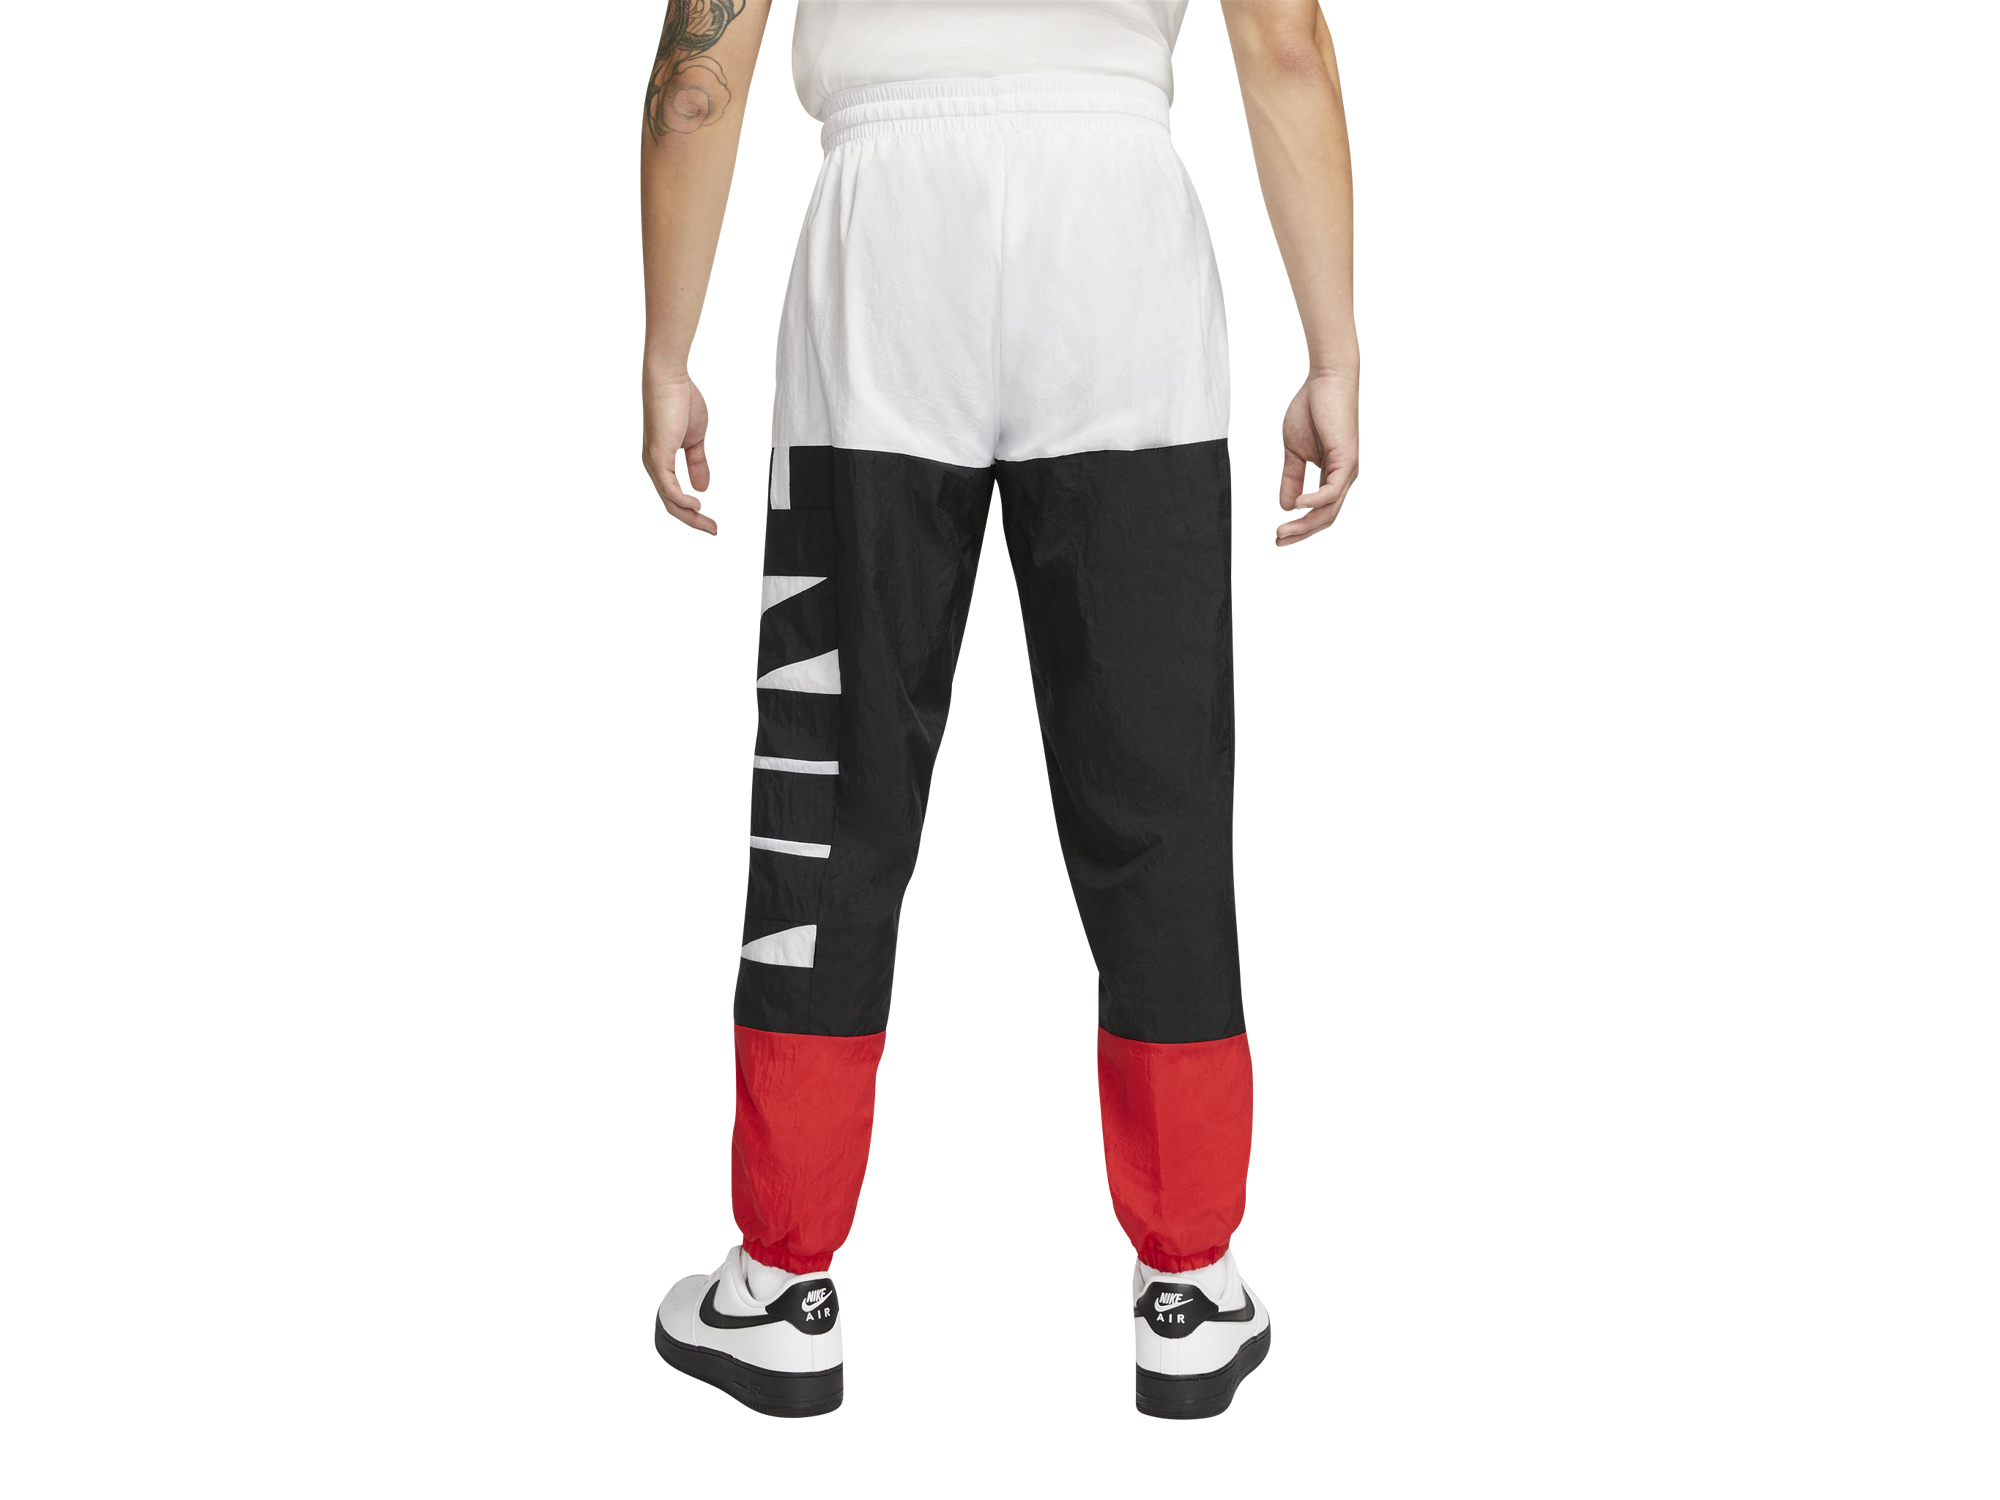 Nike Drit-Fit Starting 5 Basketball Pants